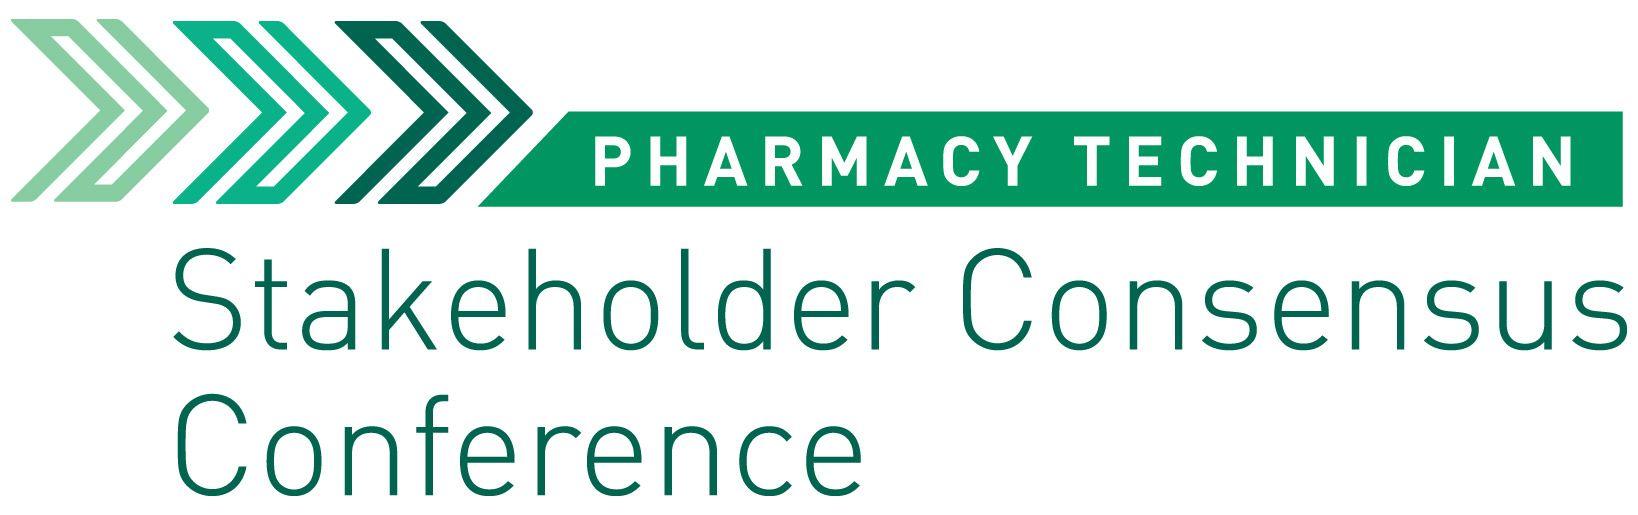 Pharmacy Technician Logo - Pharmacy Technician Stakeholder Consensus Conference